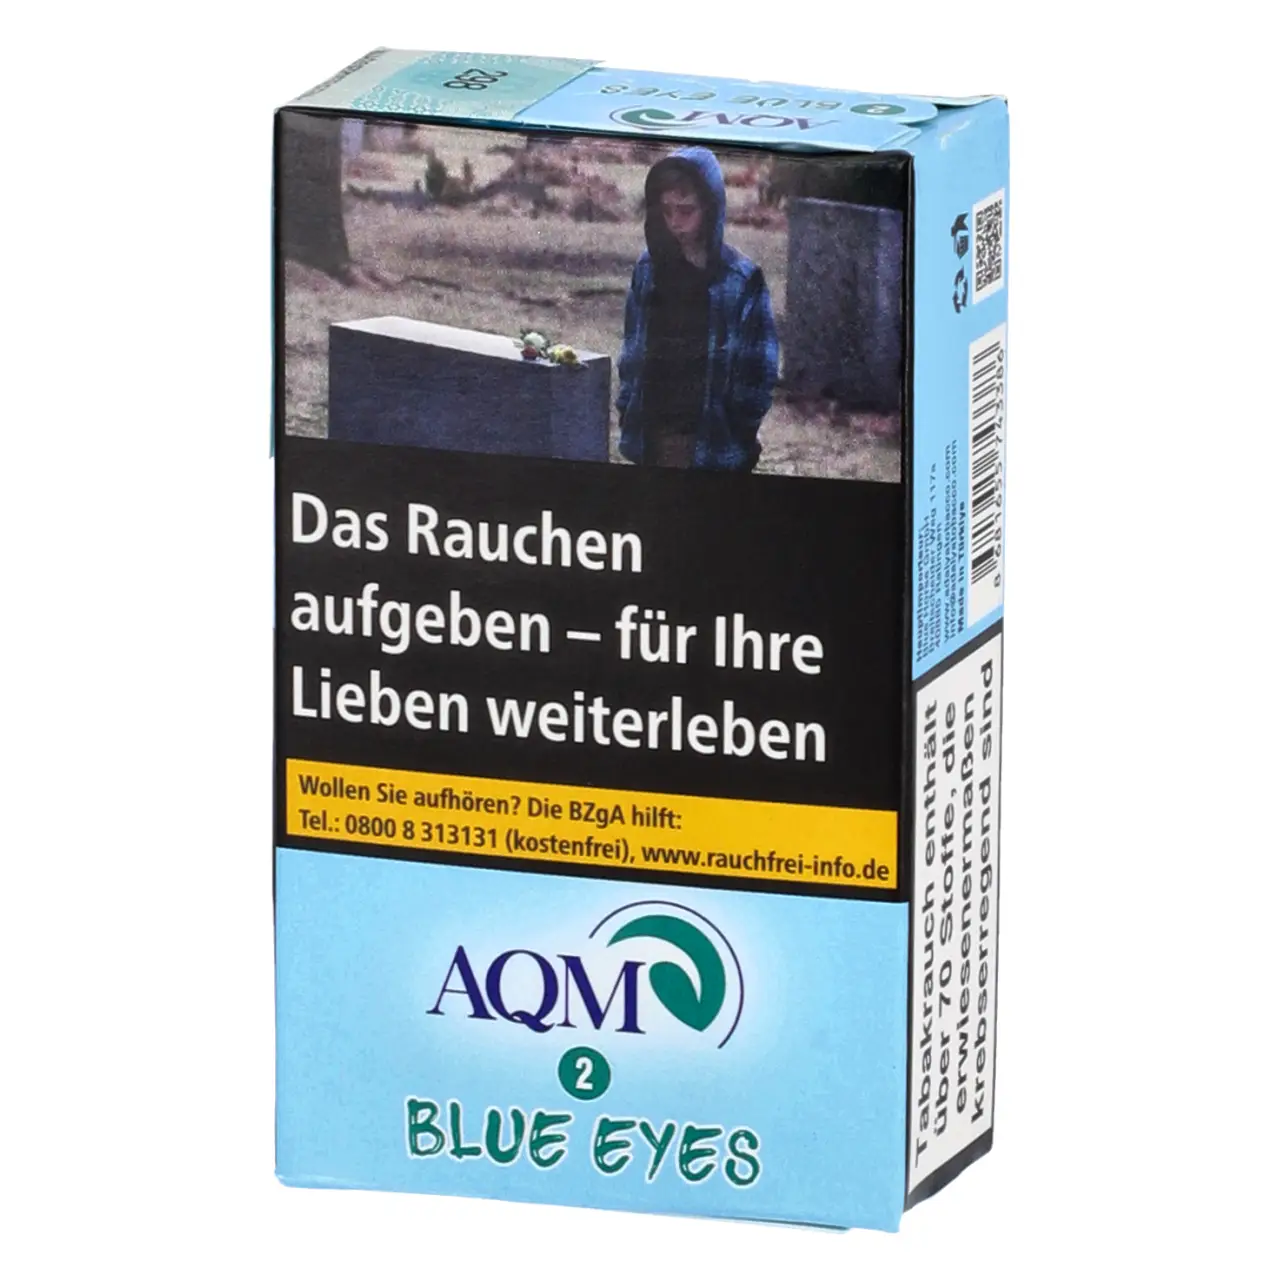 Aqua Mentha Shisha Tabak Blue Eyes - Blaubeere - 25g